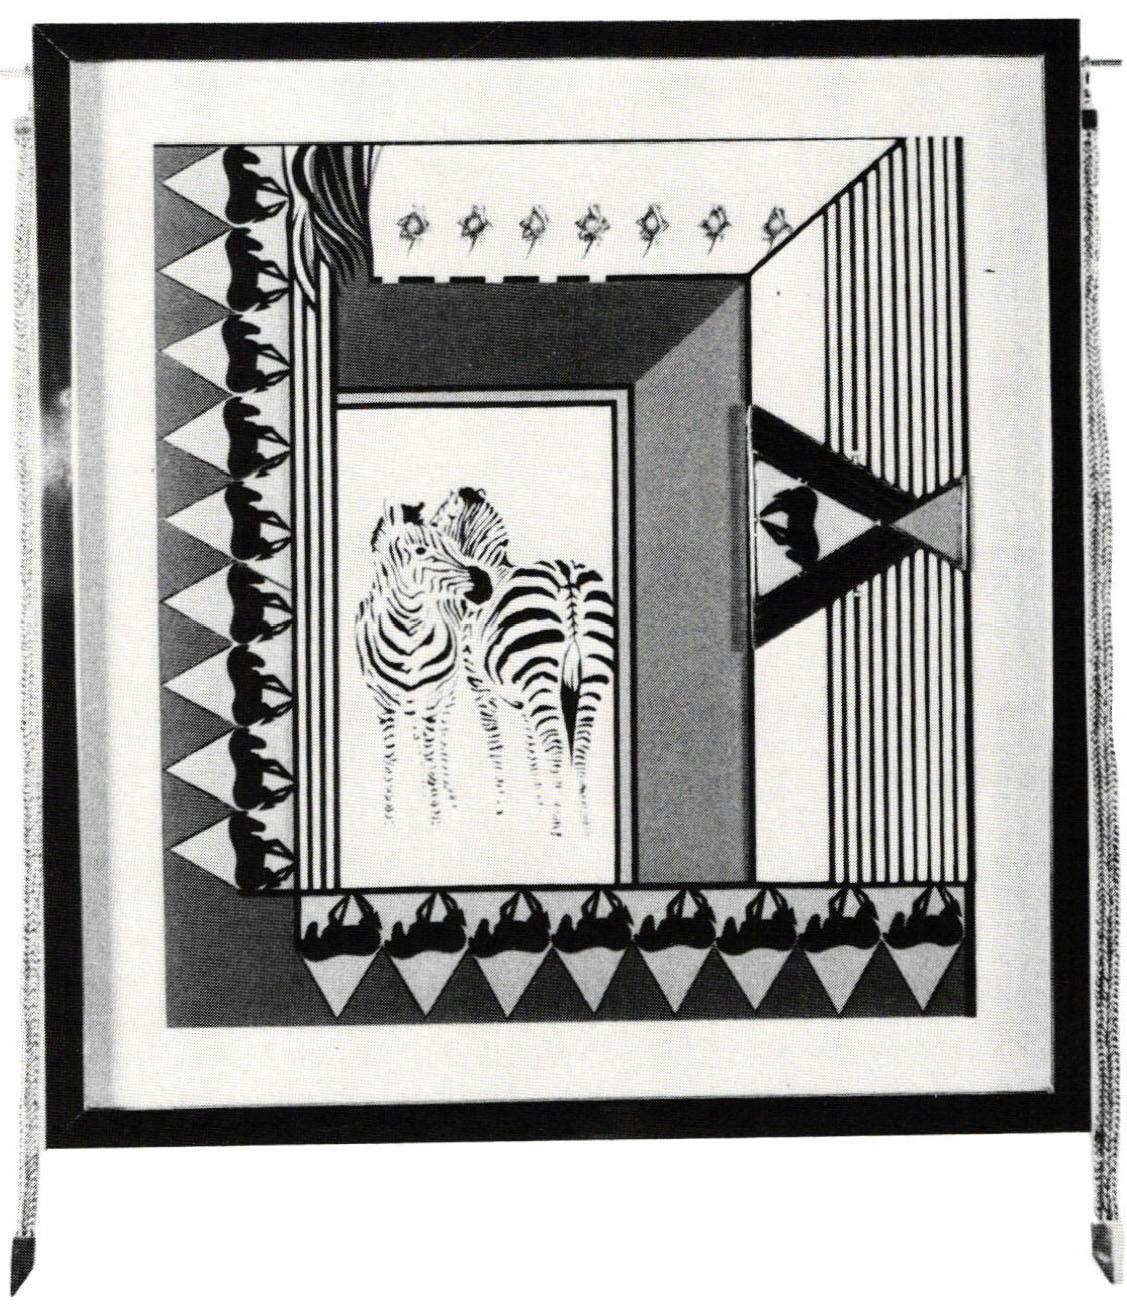 The Zebras Rose - Natalie Paul Exhibition